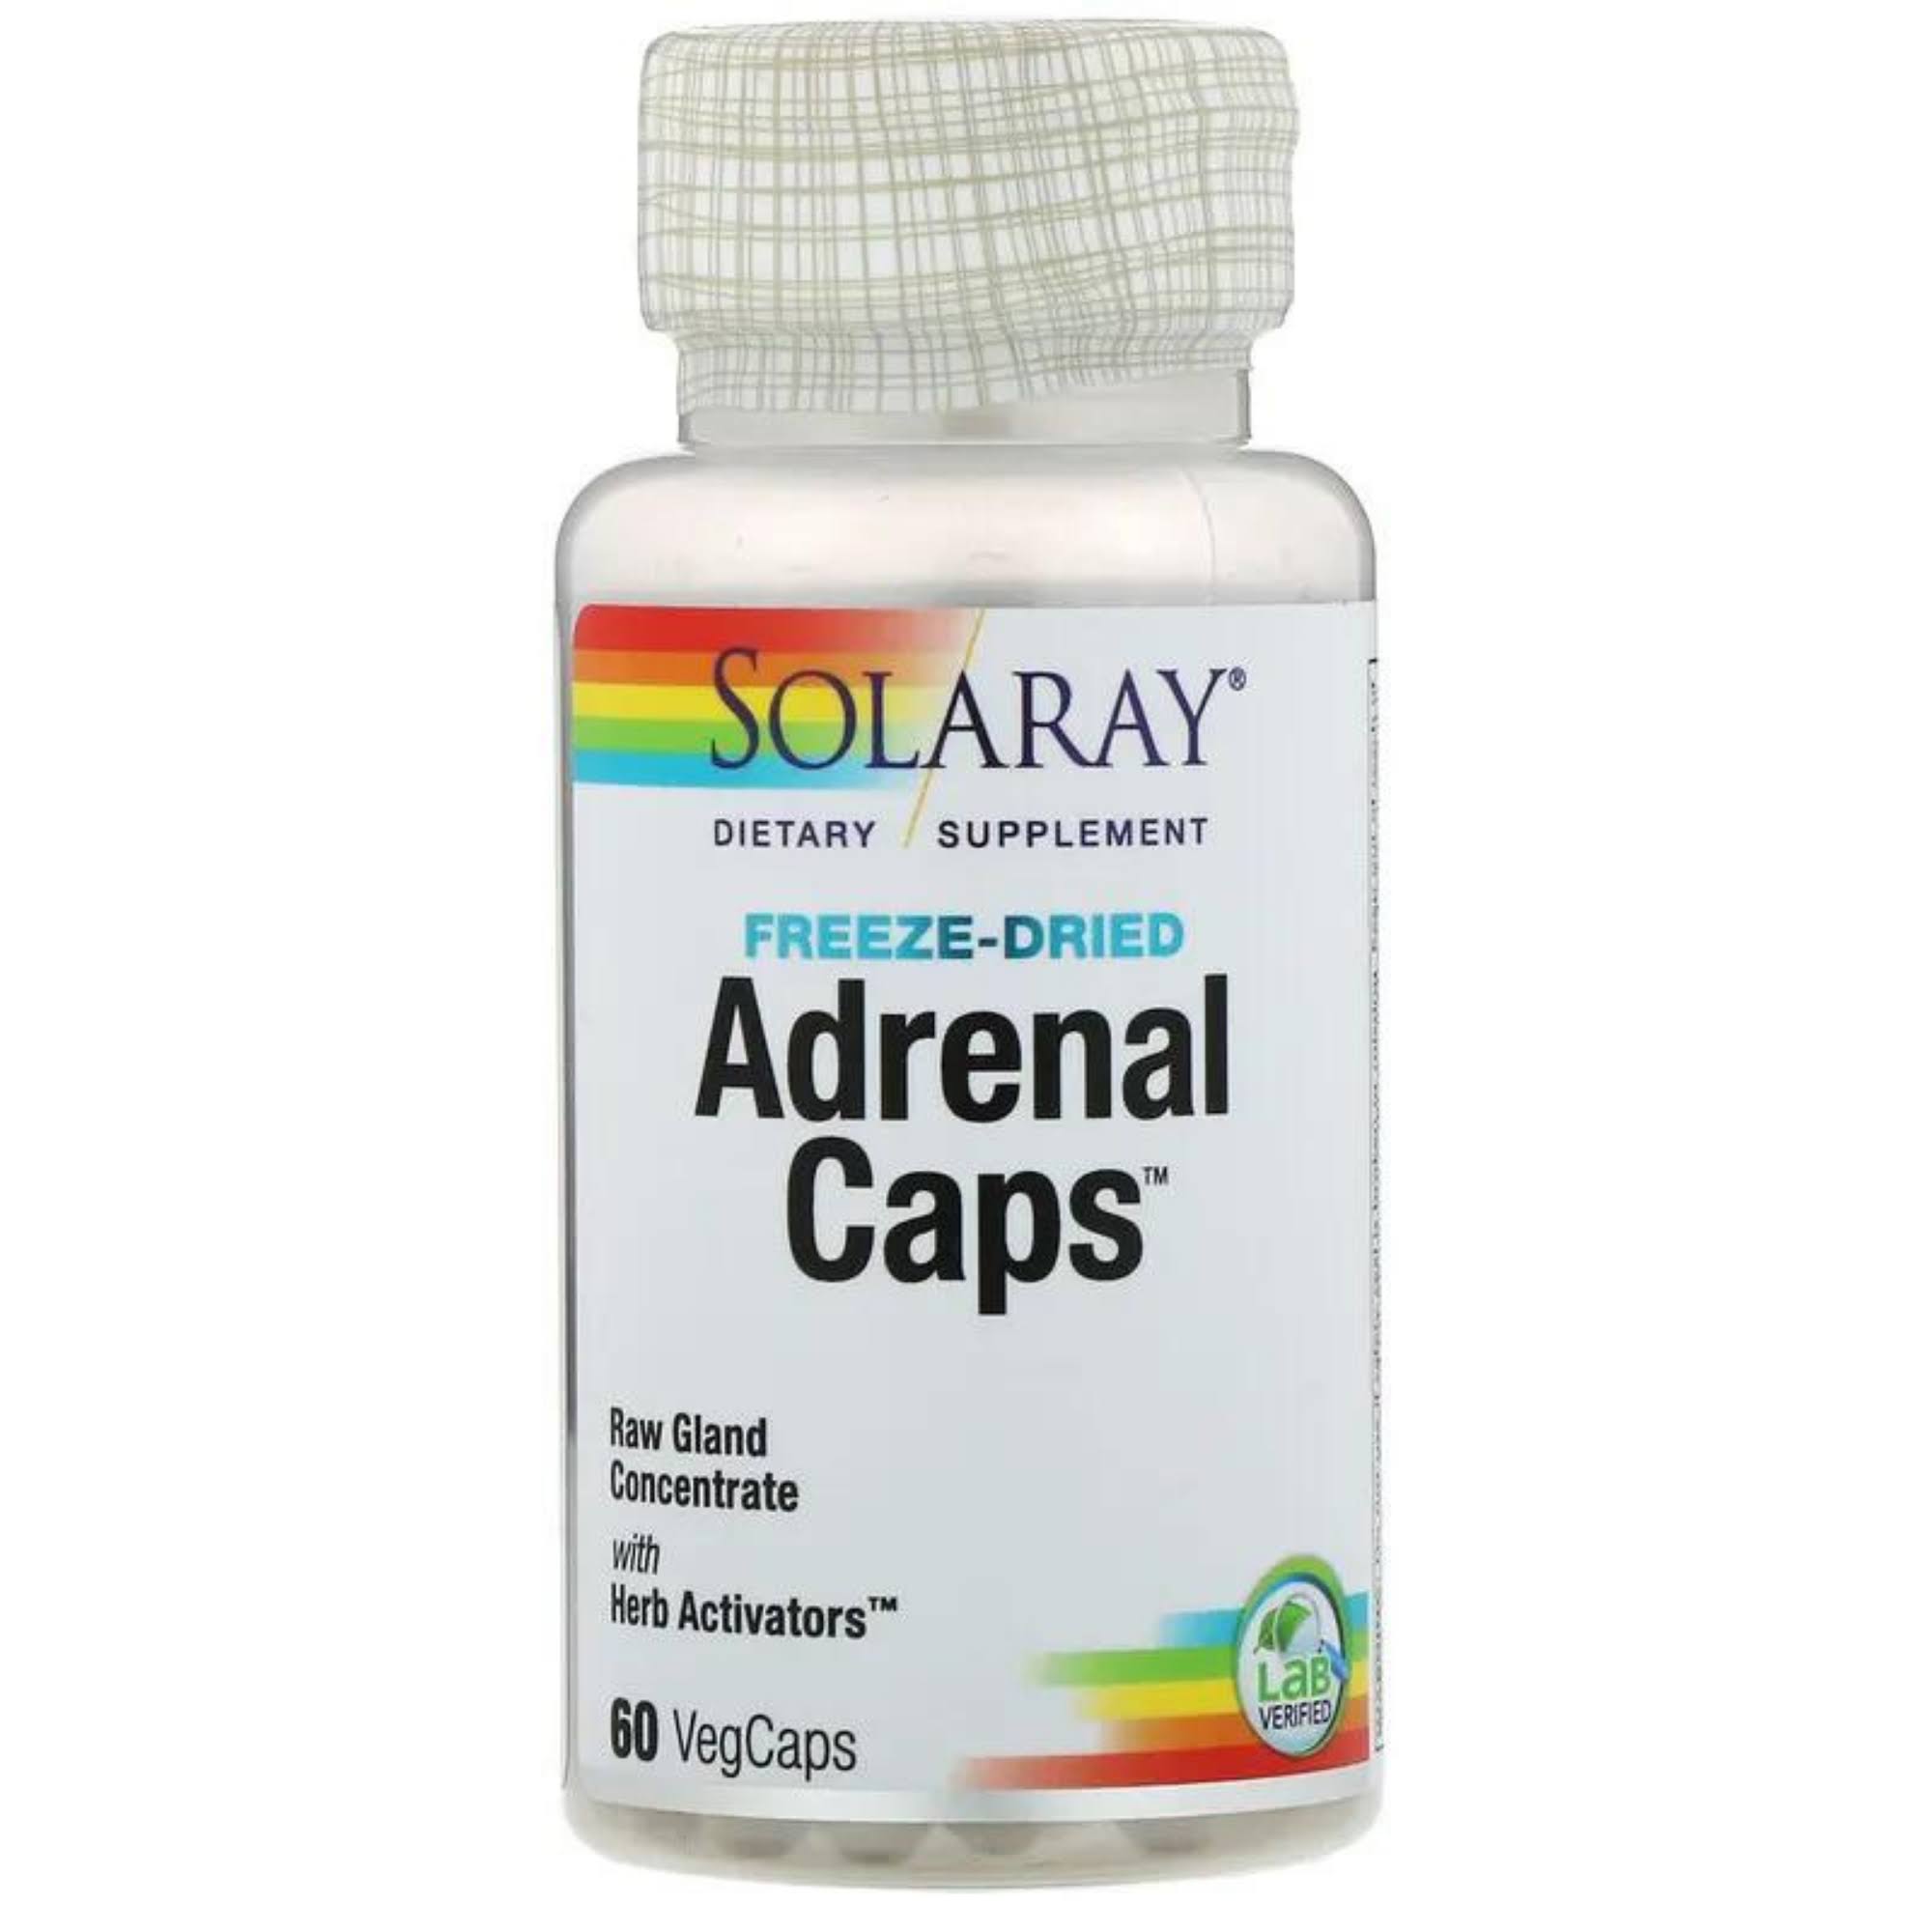 Solaray Adrenal Caps Supplement - 60 Capsules